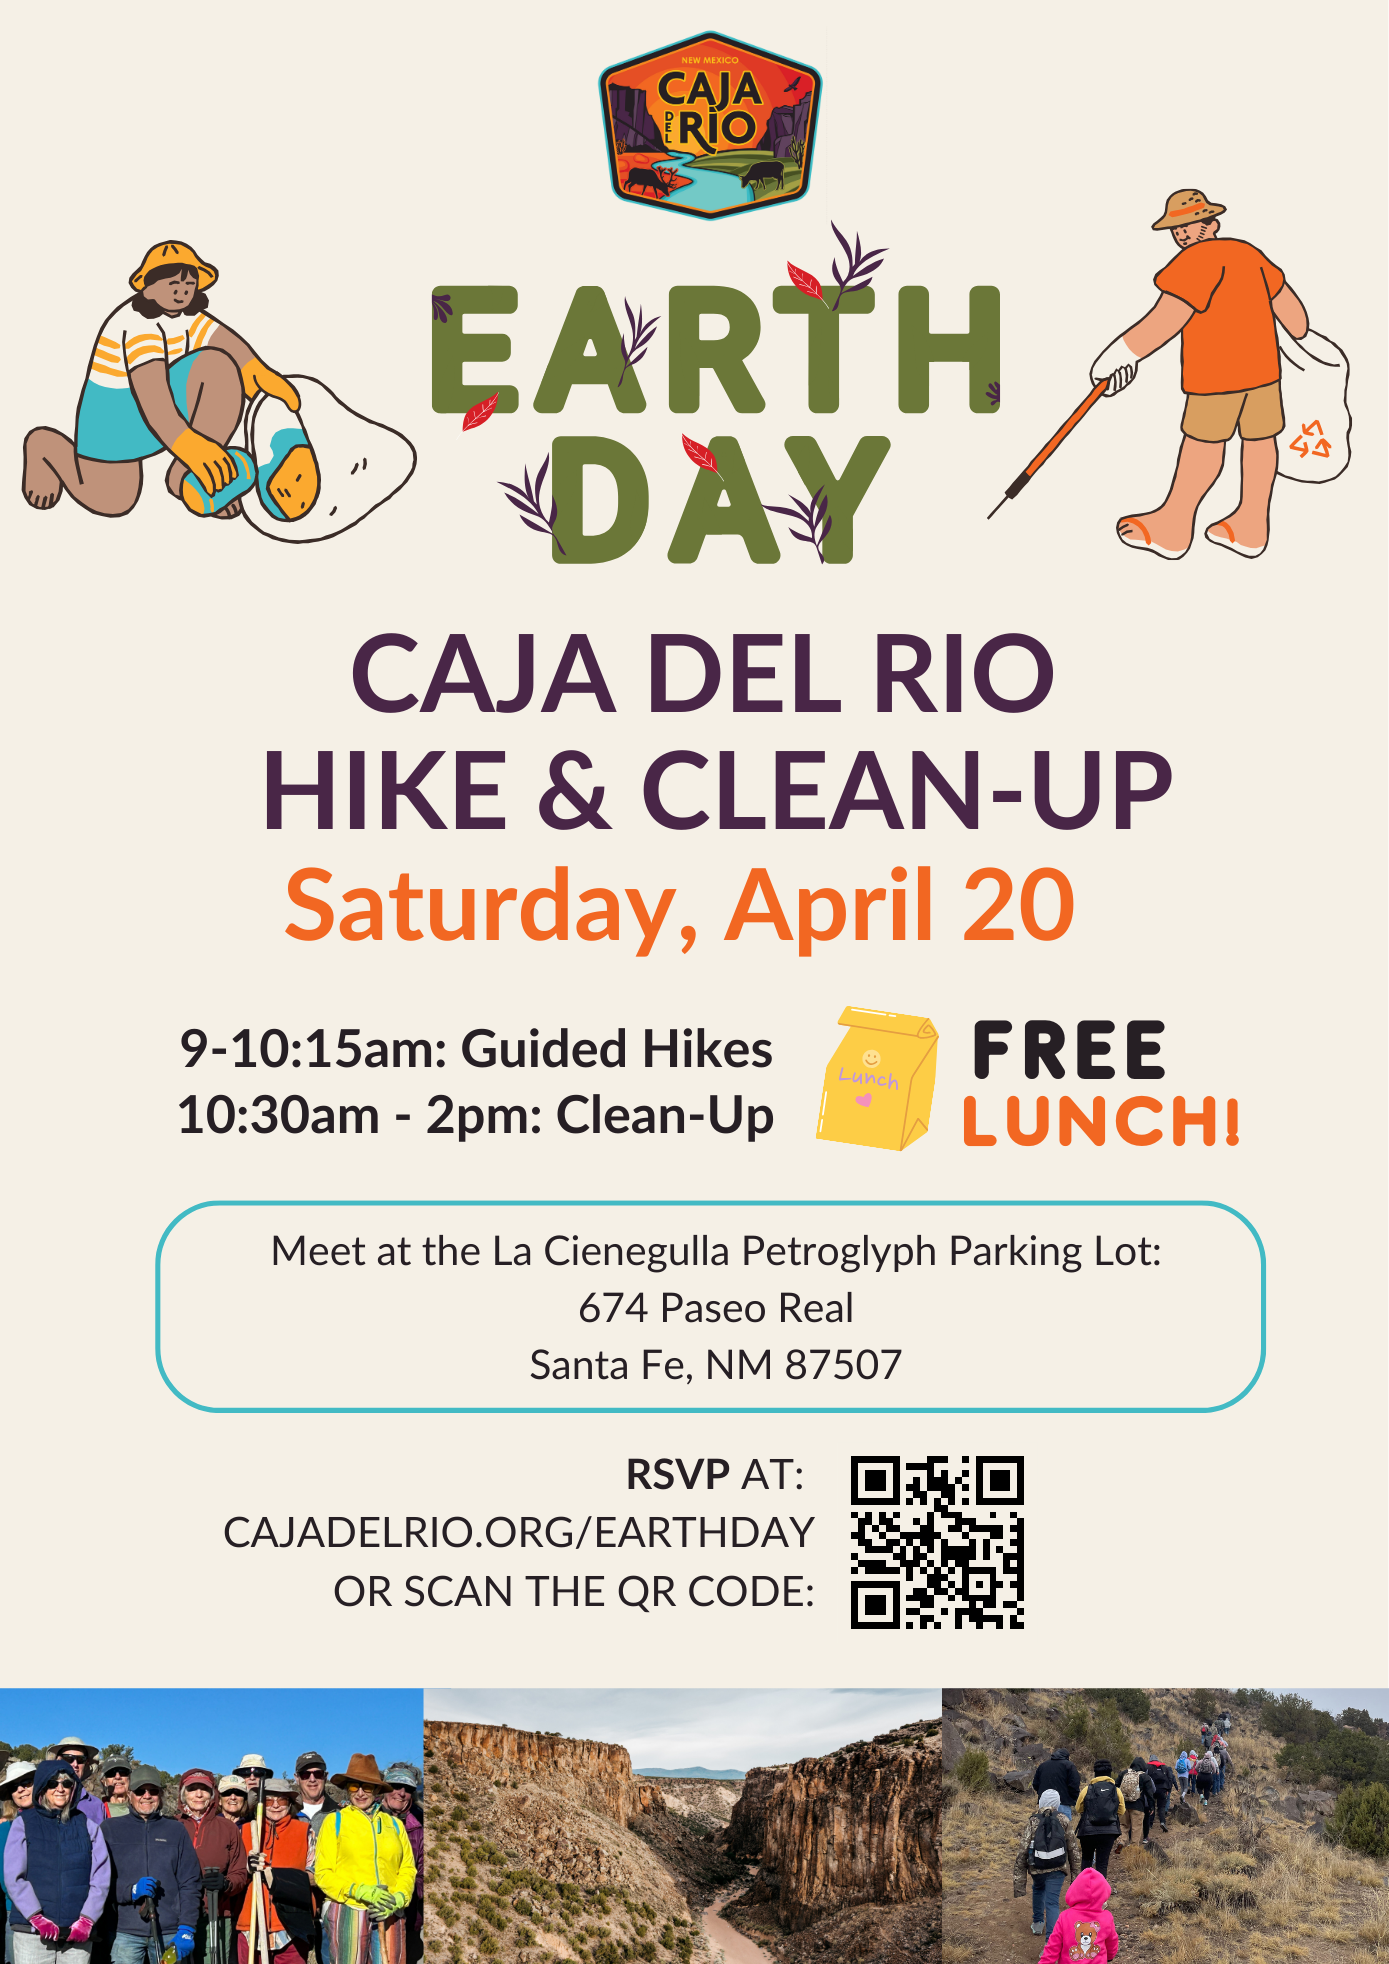 Earth Day: Caja del Rio Hike & Clean-Up